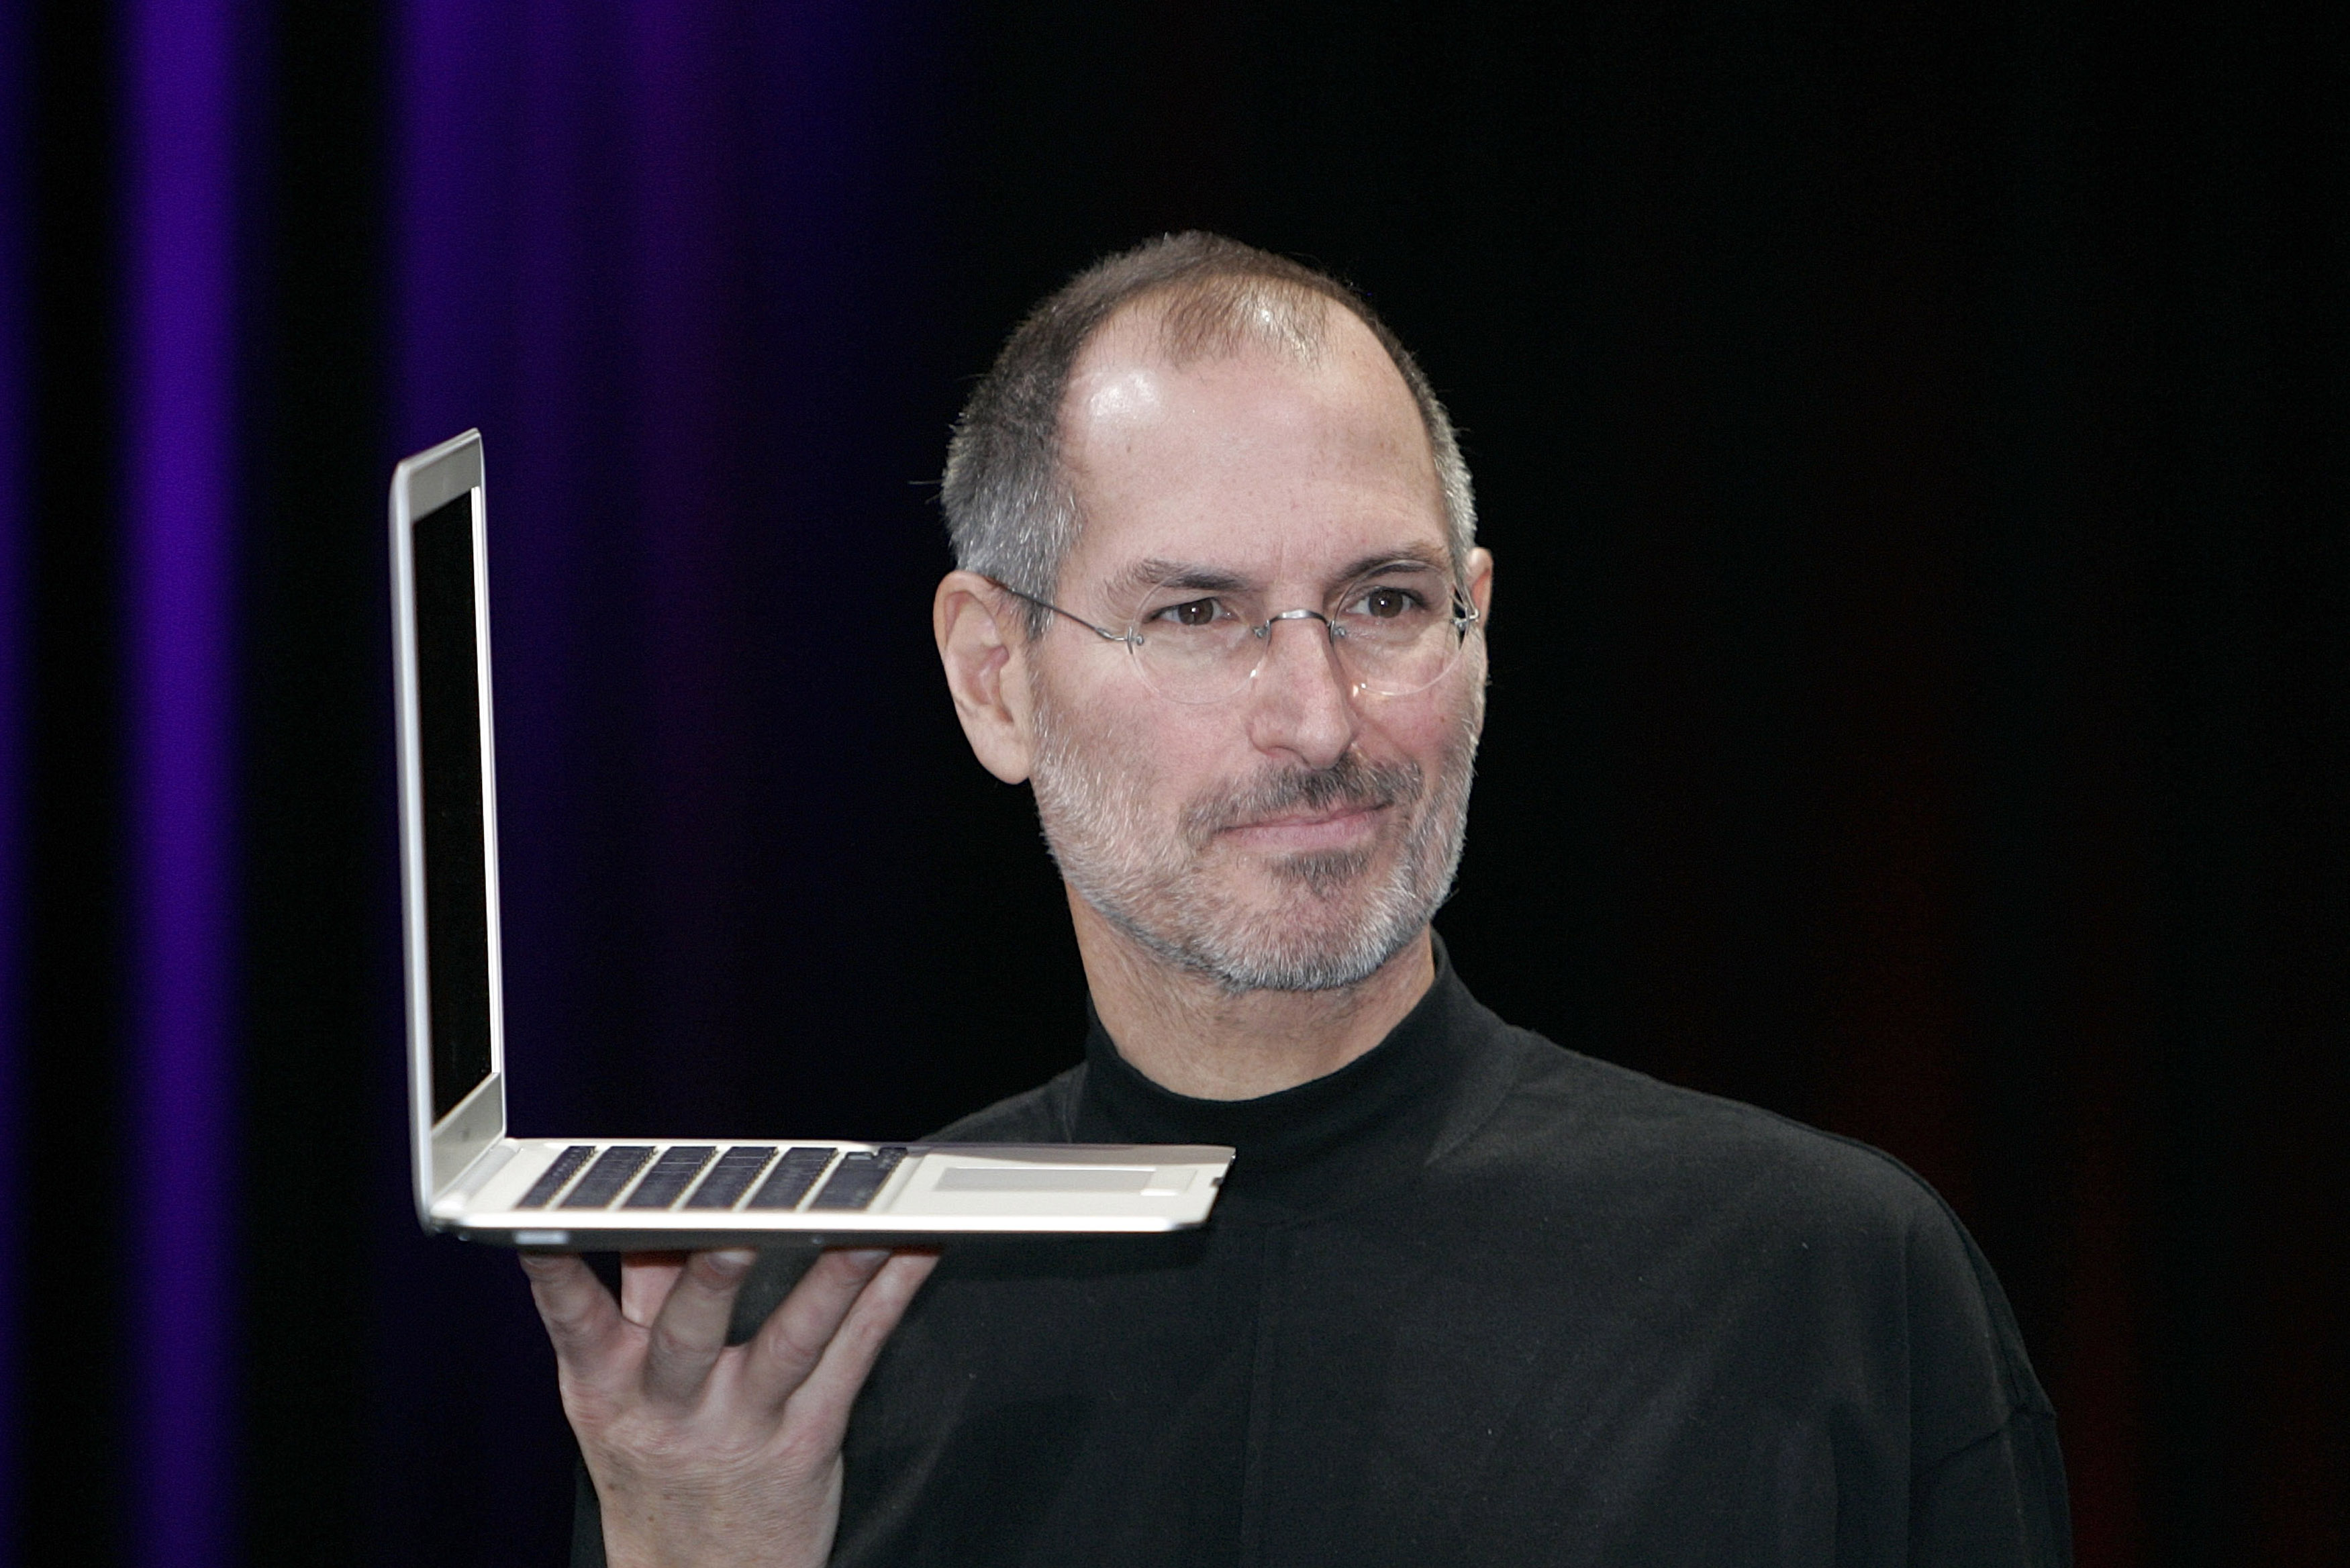 Jobs introducing MacBook Air at Macworld 2008